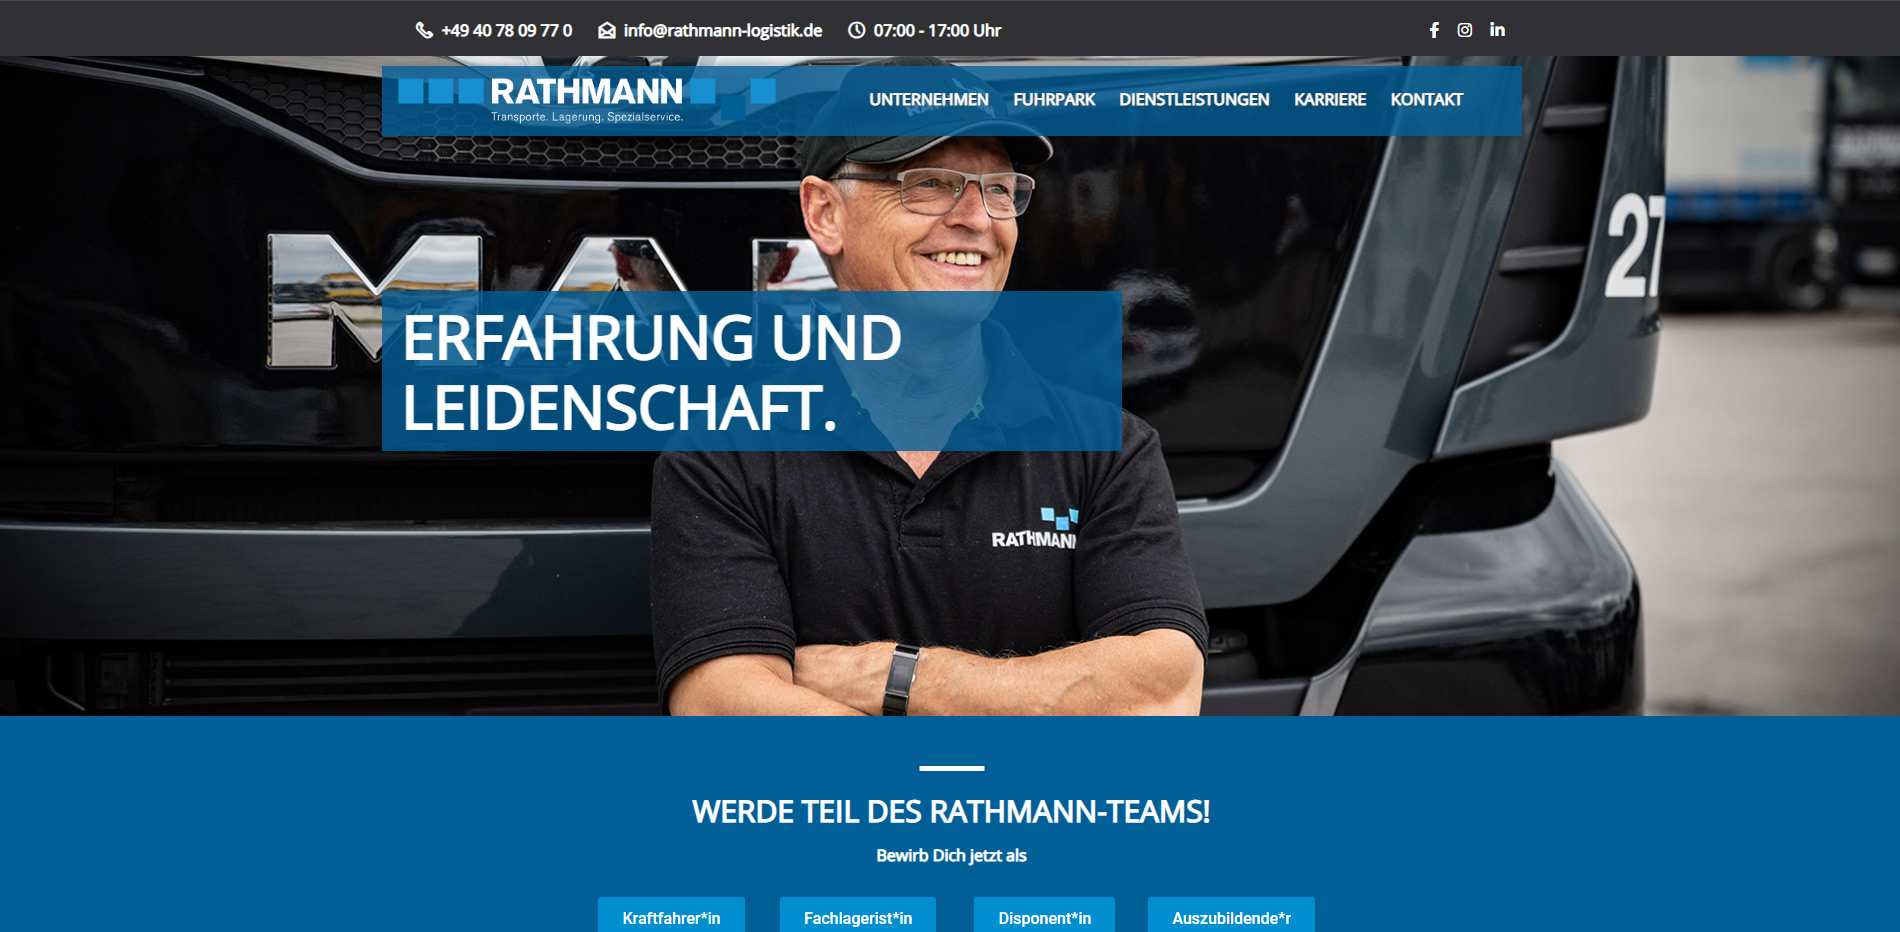 rathmann-logistik_de